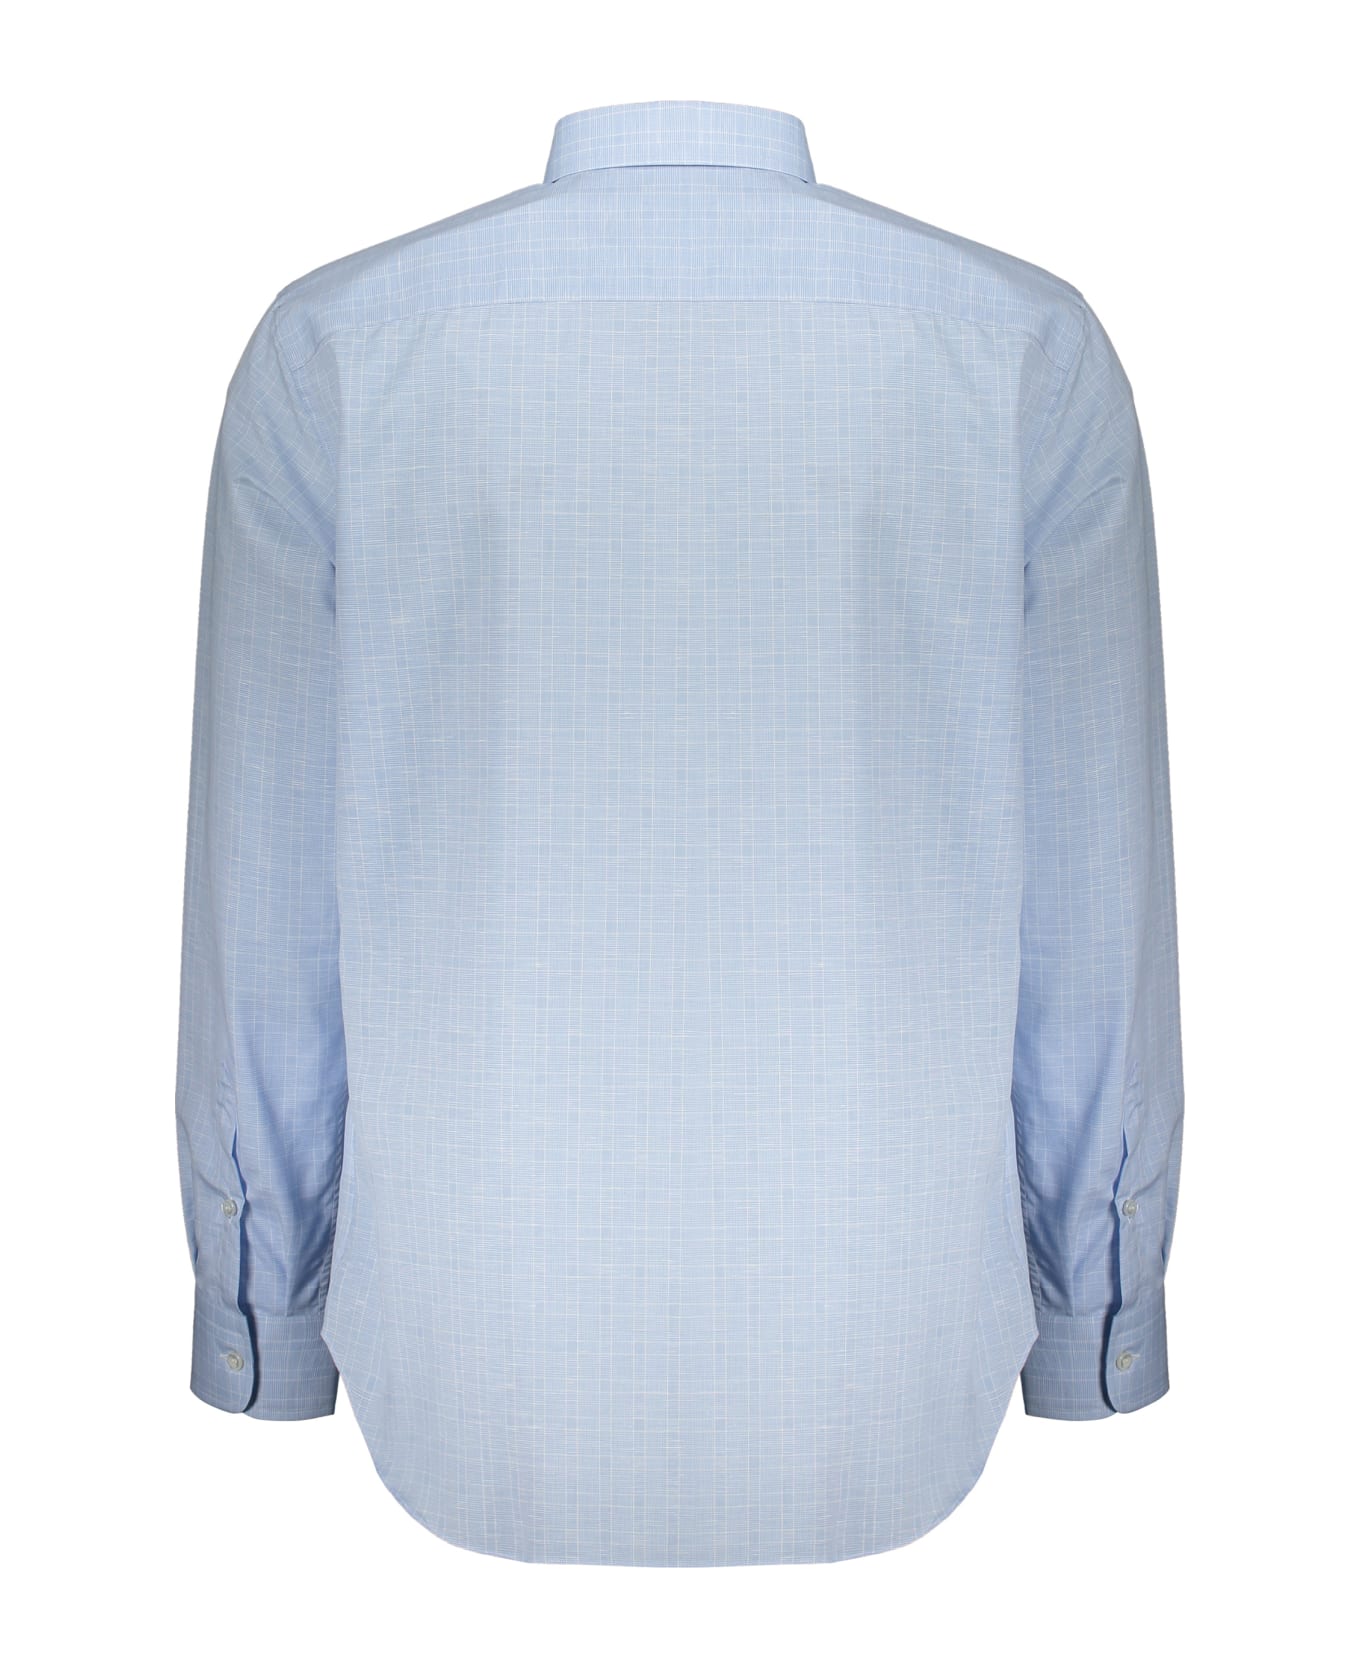 Brioni Checked Shirt - Light Blue シャツ